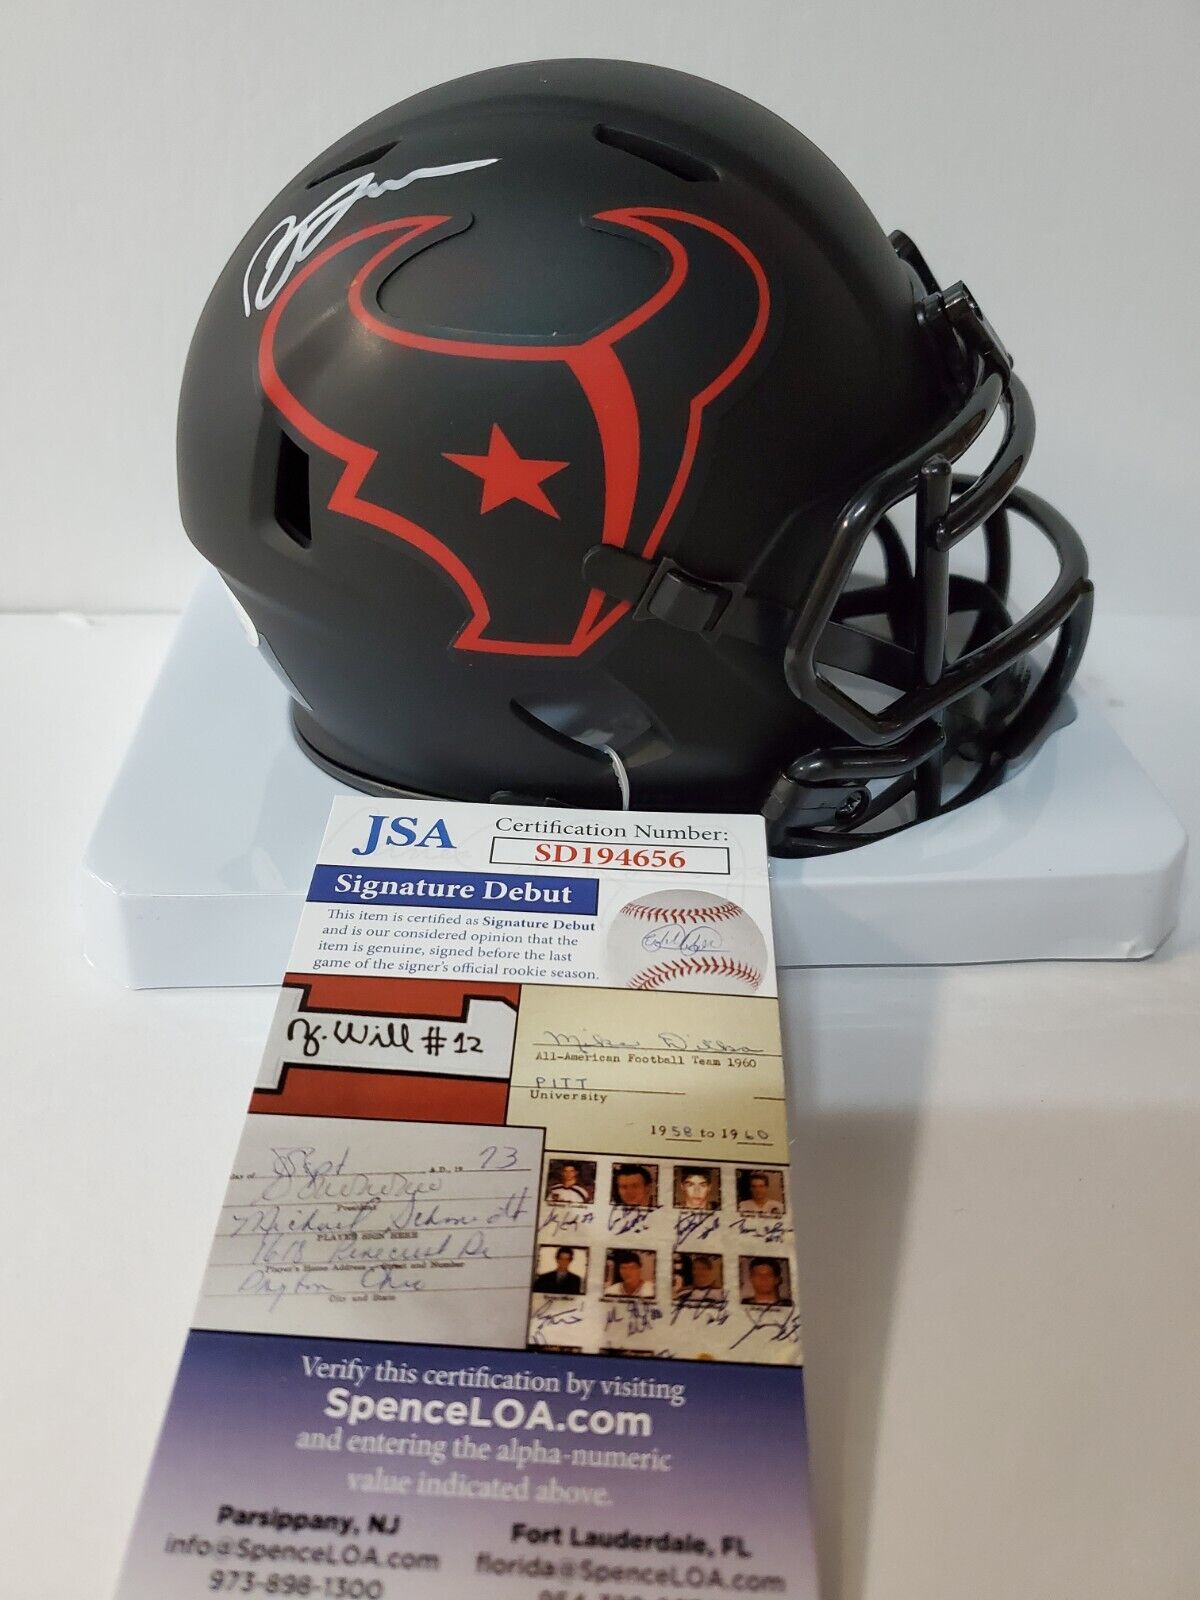 MVP Authentics Houston Texans Brevin Jordan Signed Eclipse Mini Helmet Jsa Coa 103.50 sports jersey framing , jersey framing